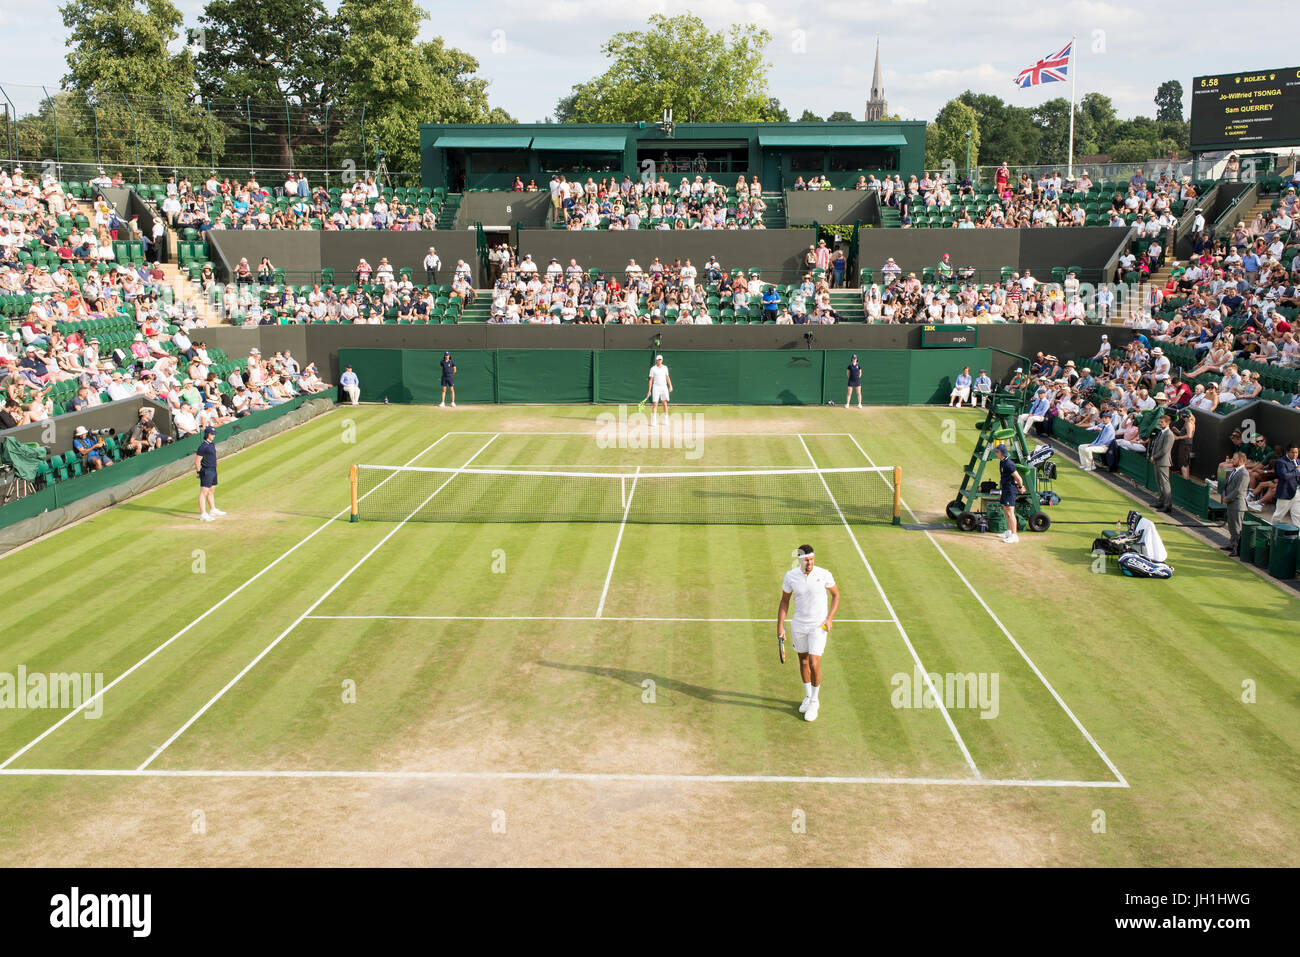 London, UK - July 2017: Court No. 2. at The Championships, Wimbledon full of spectators watching the ongoing tennis match Stock Photo